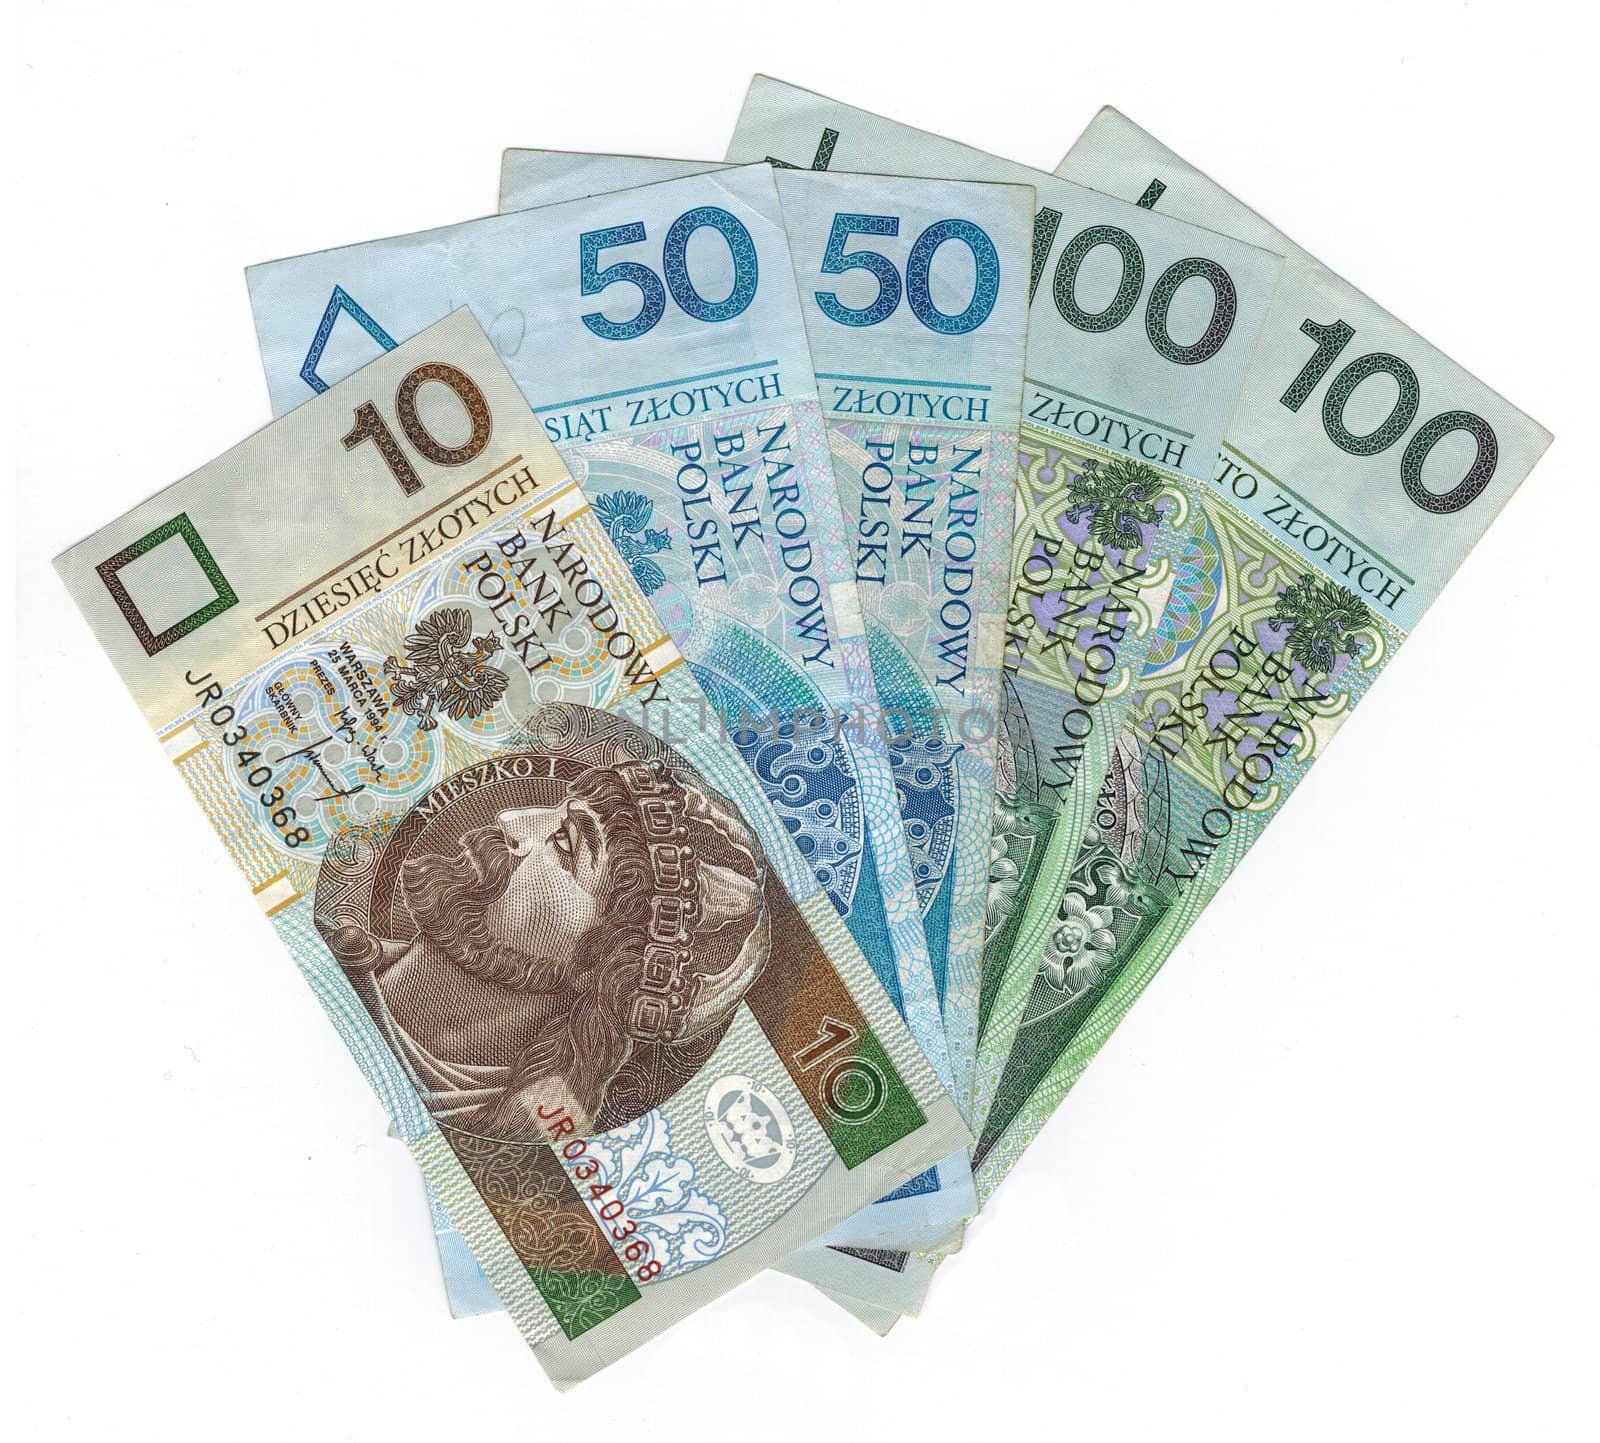 Polish zloty banknotes by paolo77